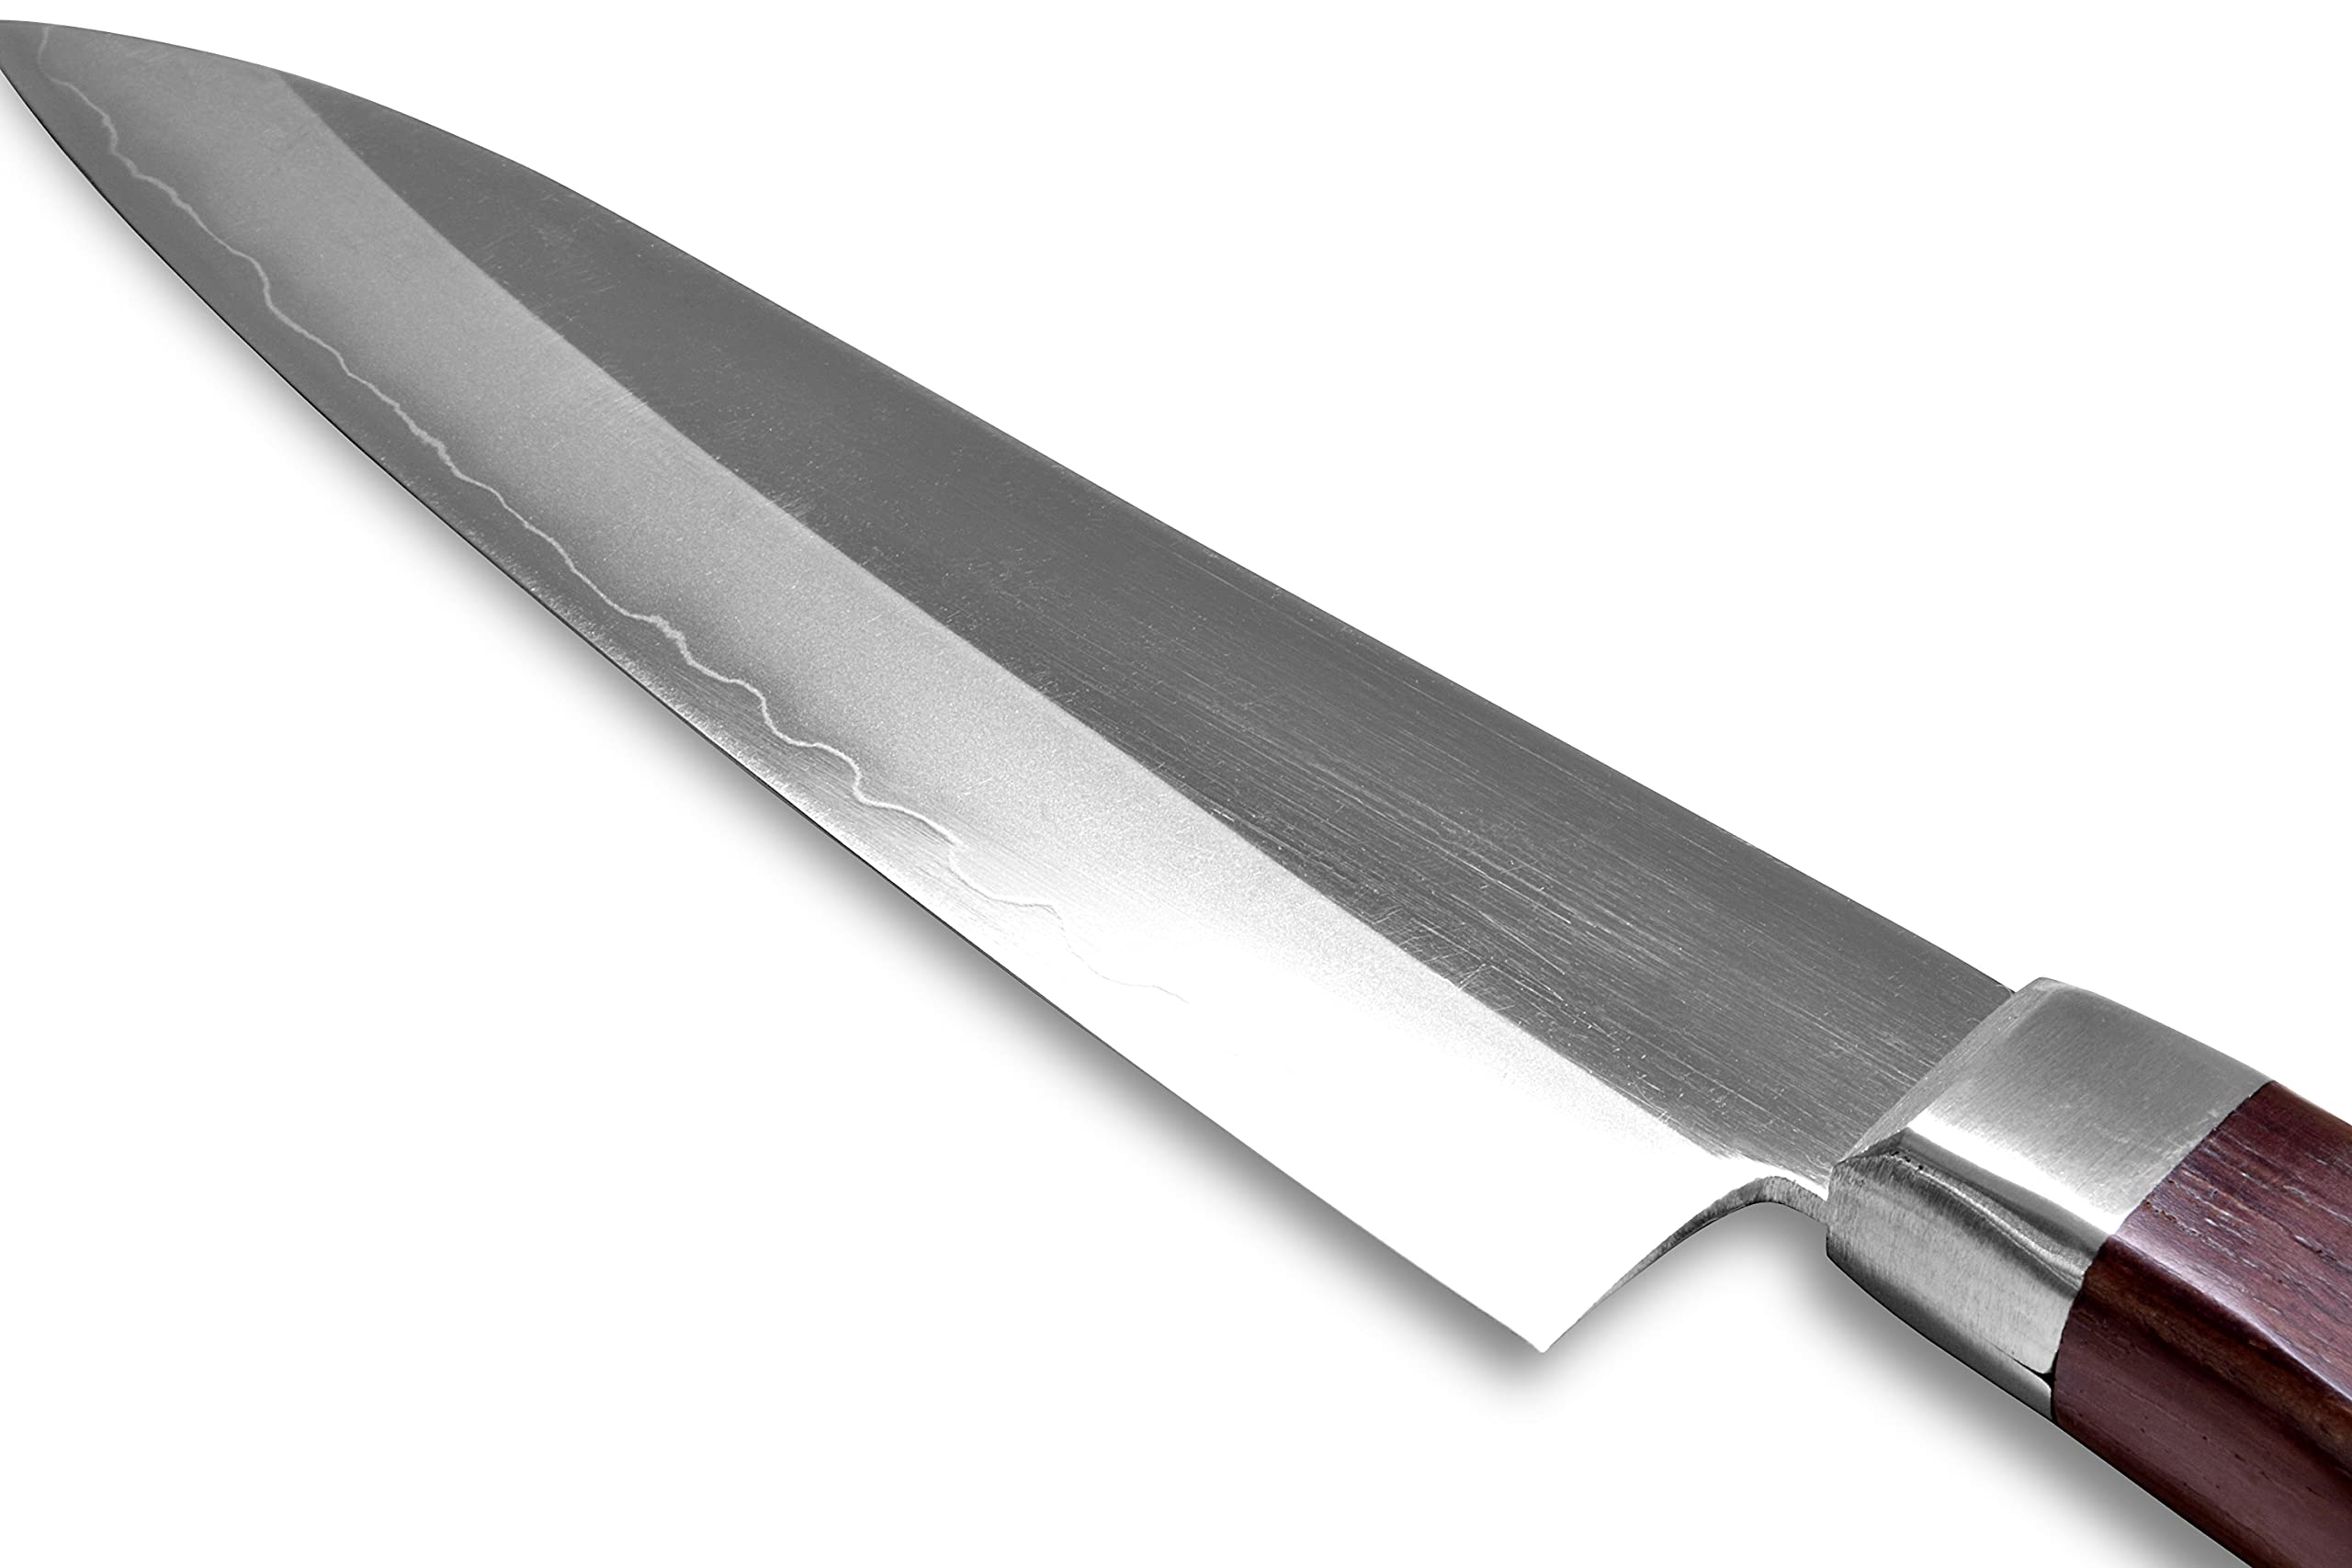 Seki Japan Japanese Seki SANBONSUGI Utility Petty Knife, 8A Stainless Steel Fruit Knife, Rose Wood Handle, 120 mm (4.7 in)